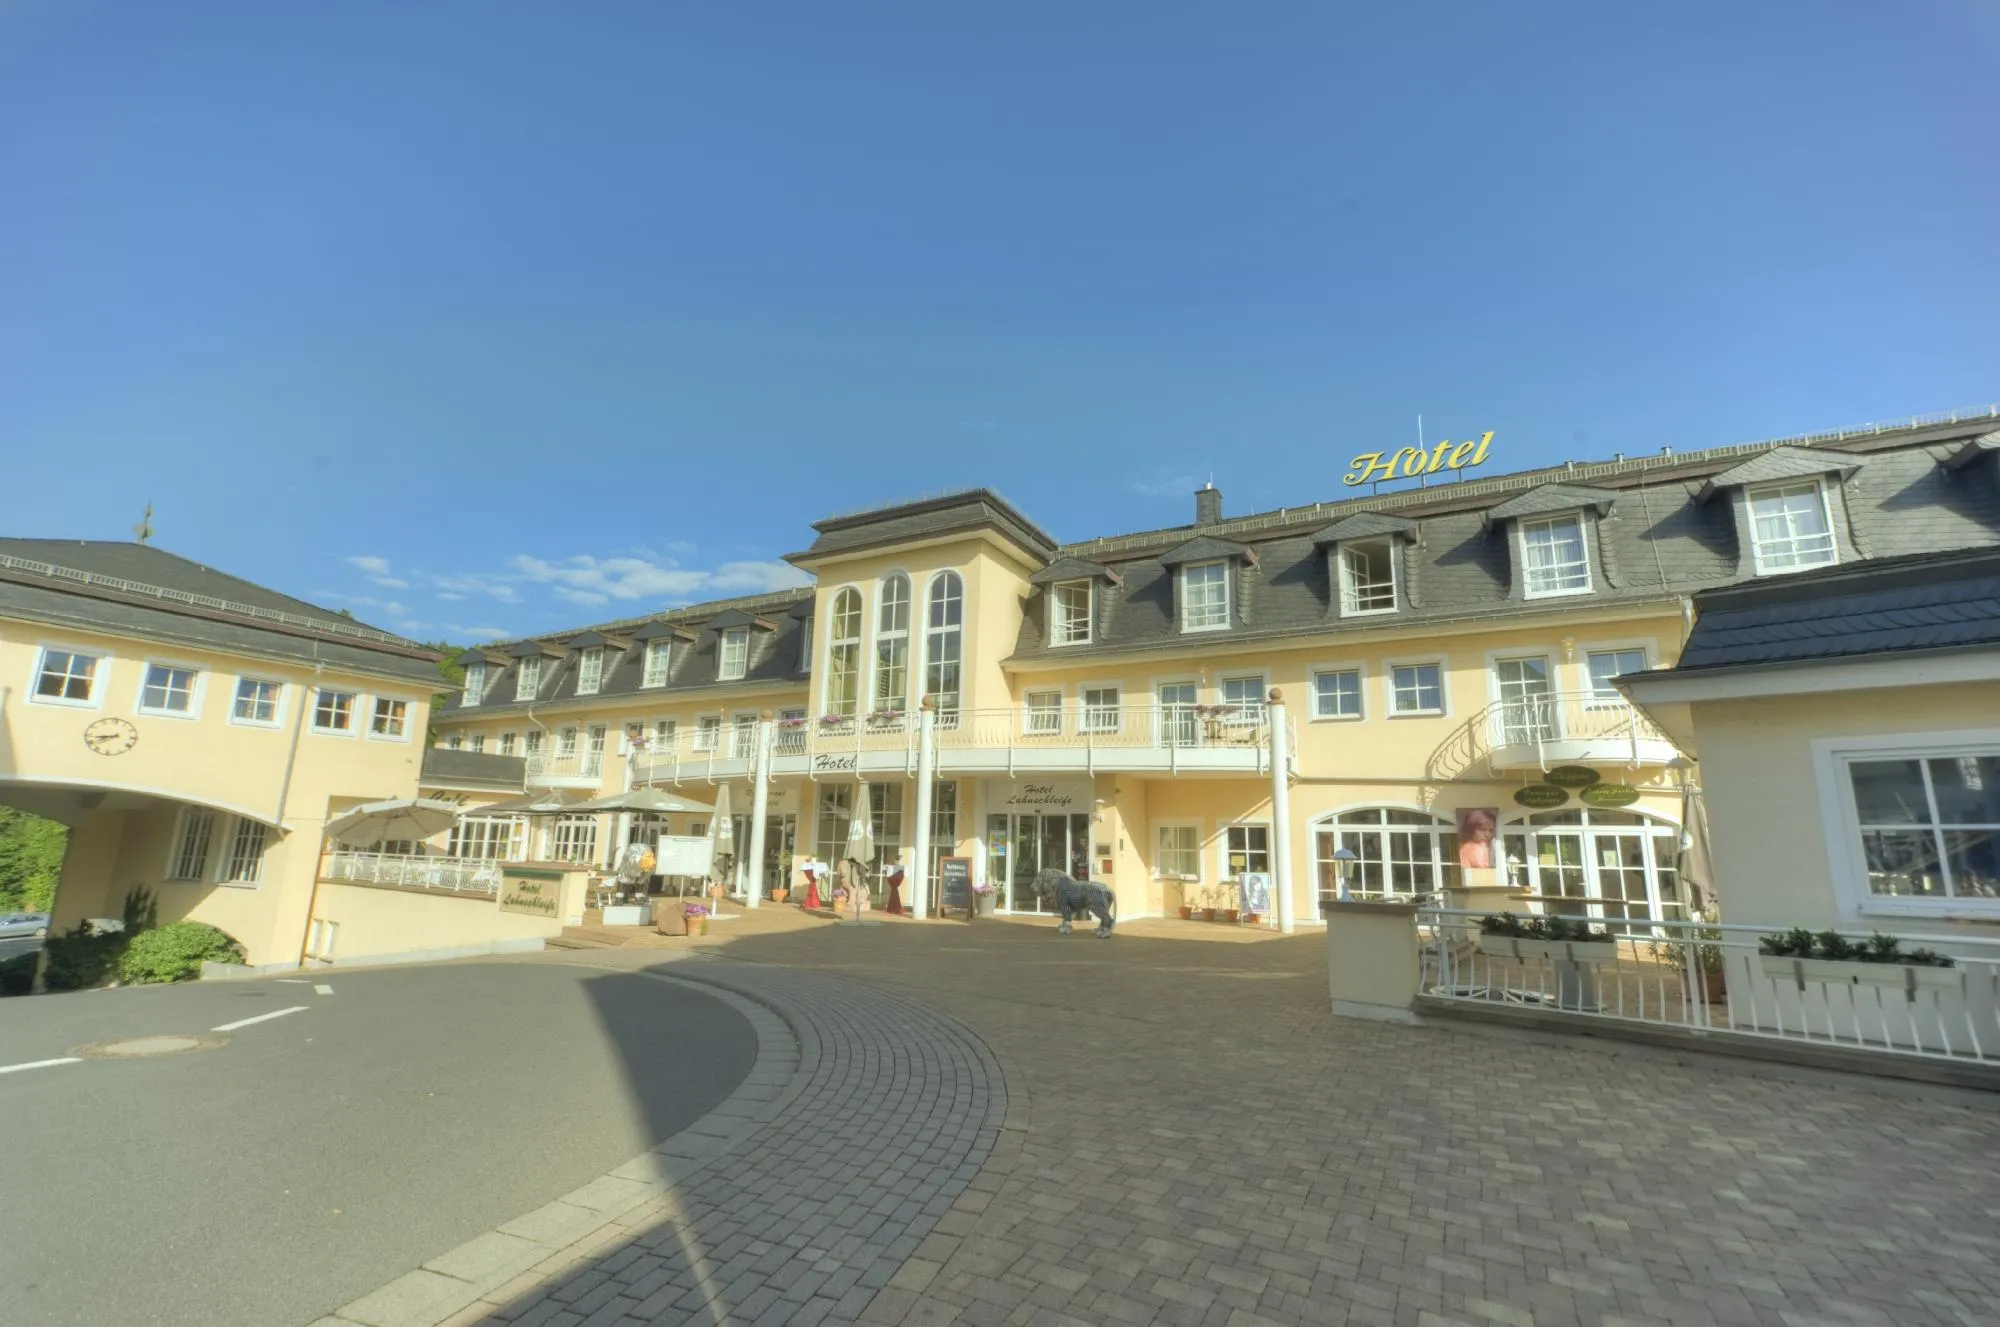 Building hotel Hotel Lahnschleife Weilburg